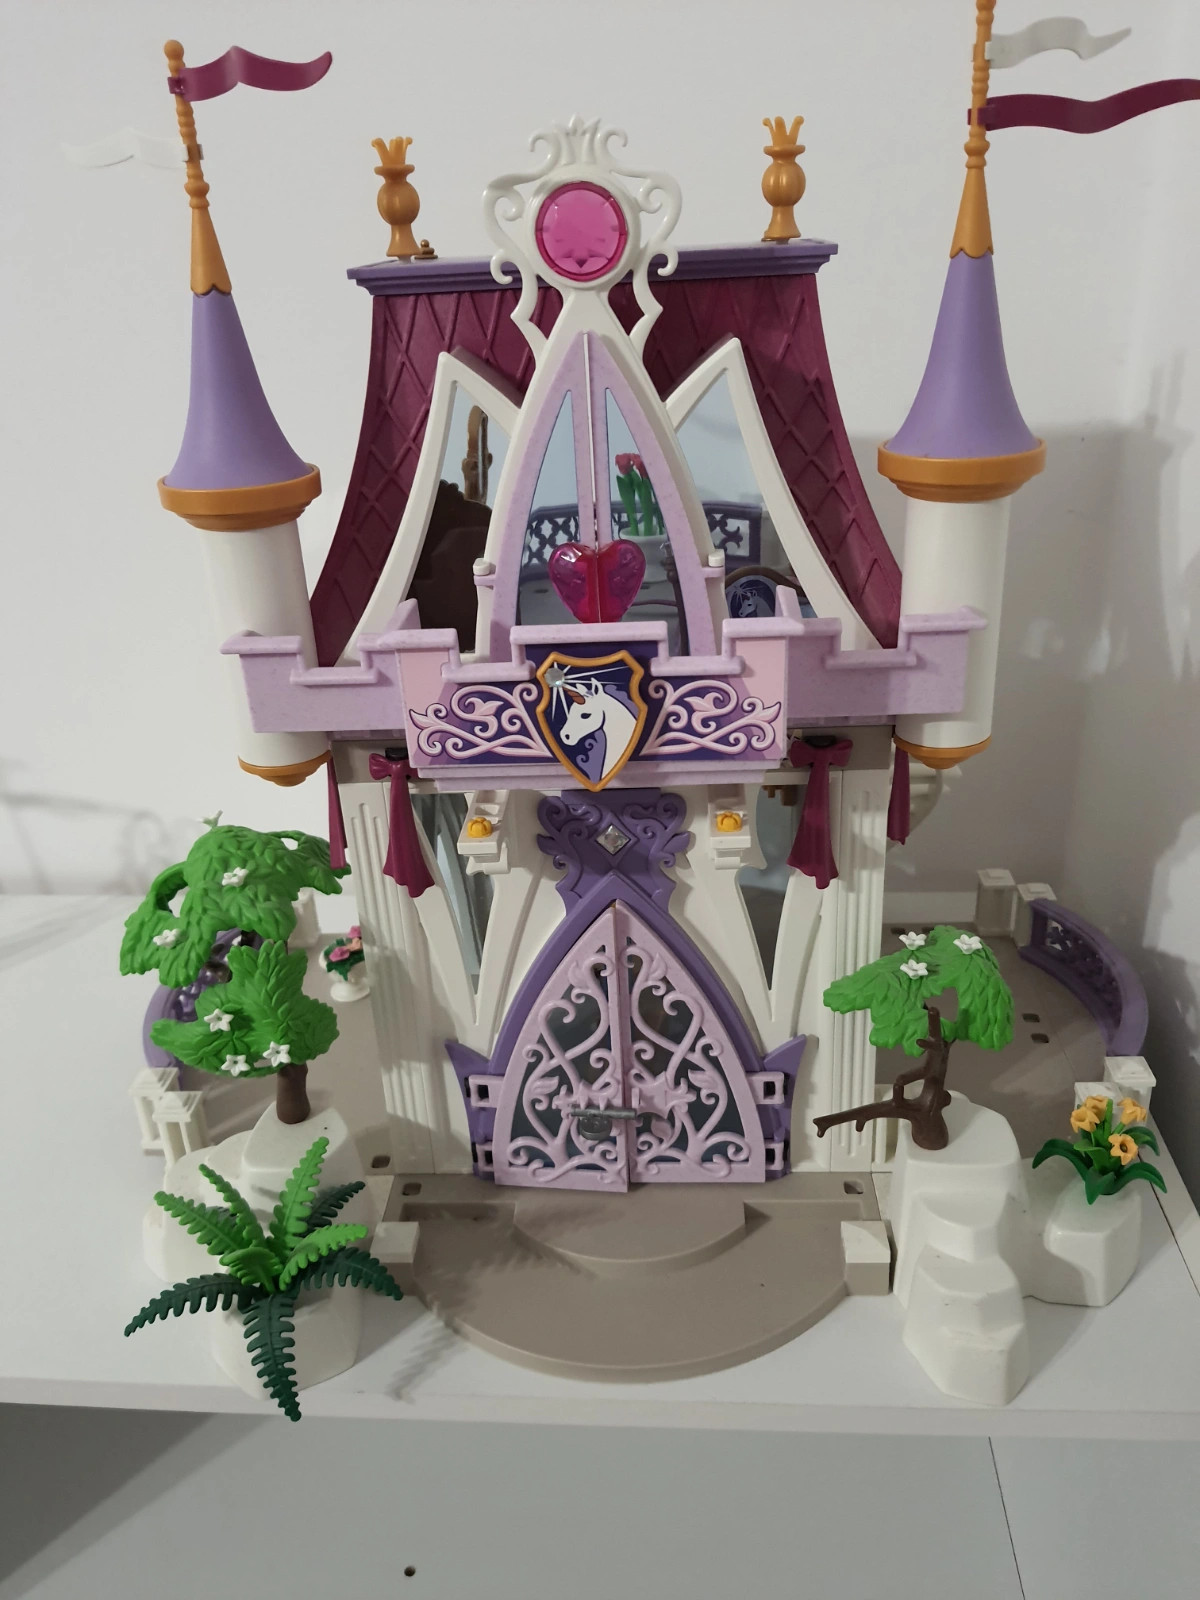 Playmobil Unicorn jewel castle 5474 - Playmobil castle toys